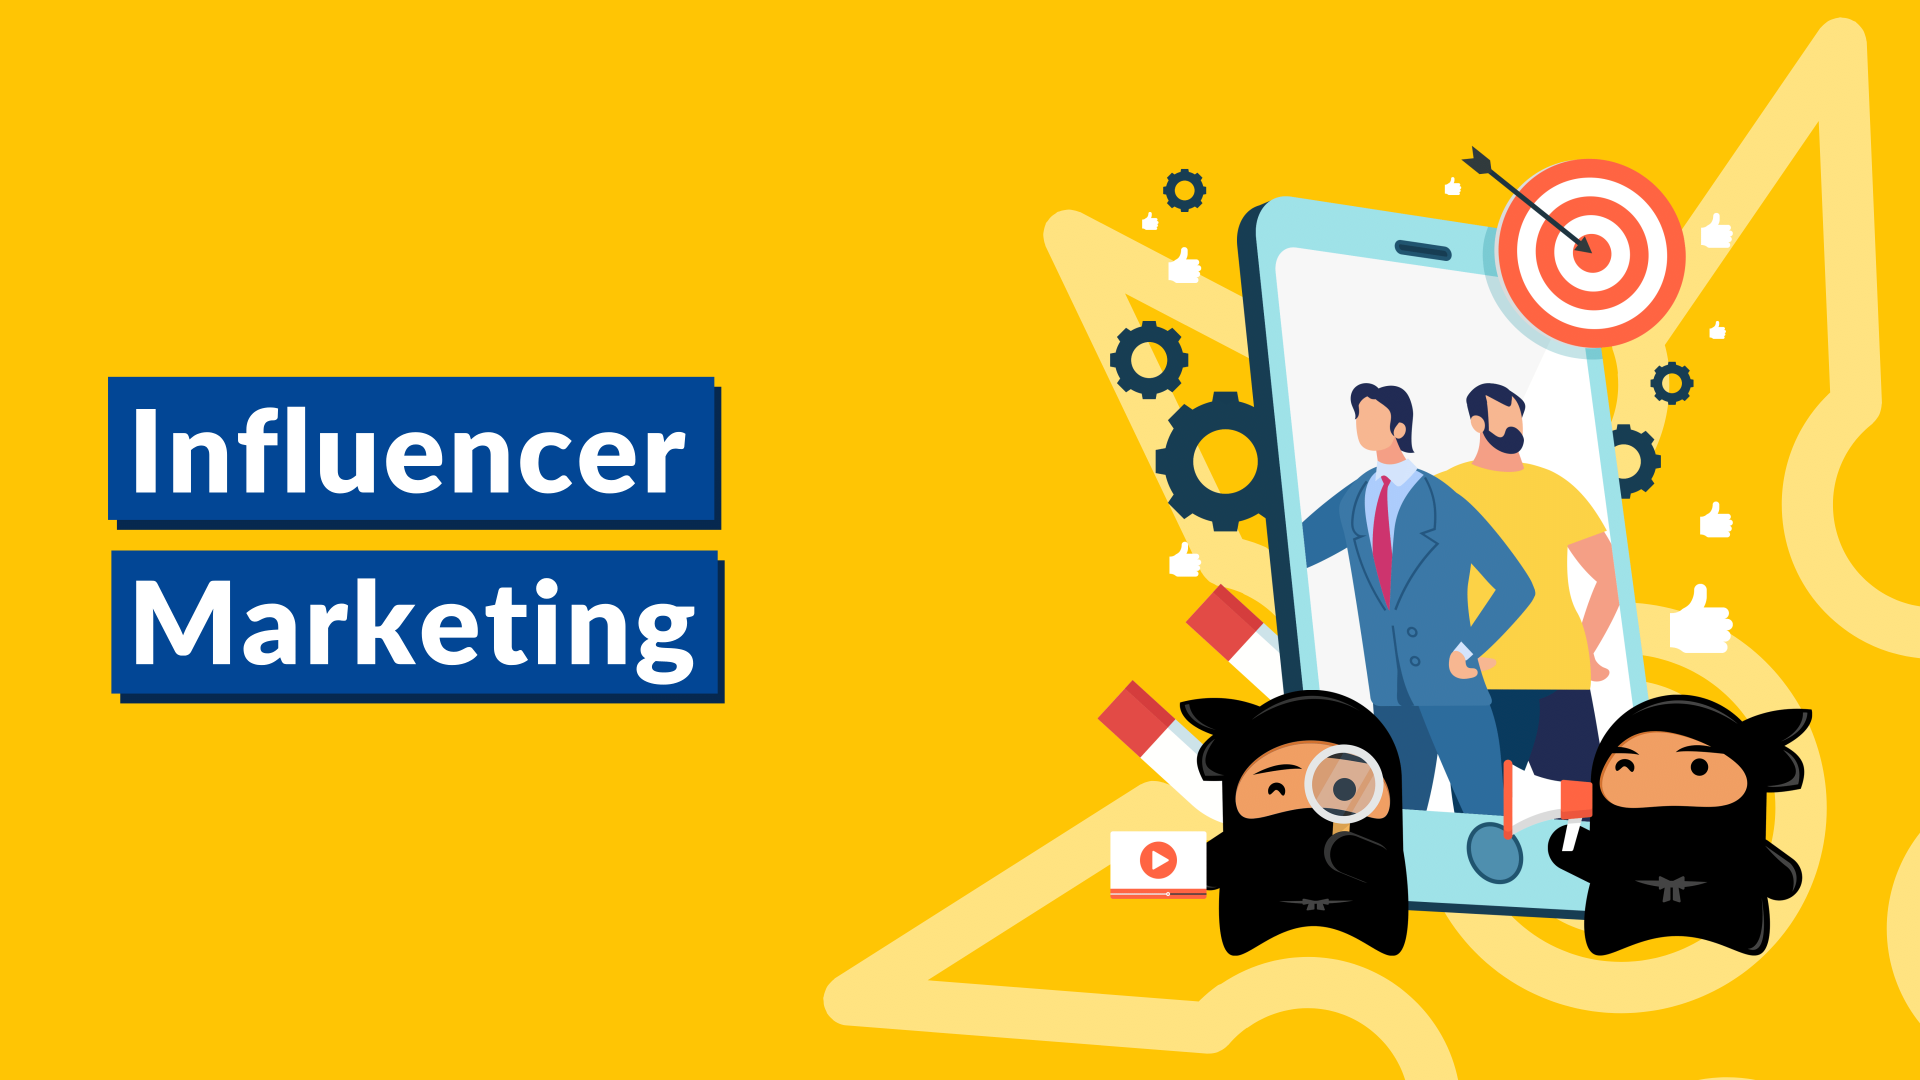 influencers marketing company in delhi, influencer marketing agency india, influencer marketing agency mumbai, influencer marketing agency, influencer marketing, influencer, marketing, agency, mumbai, influencer marketing services